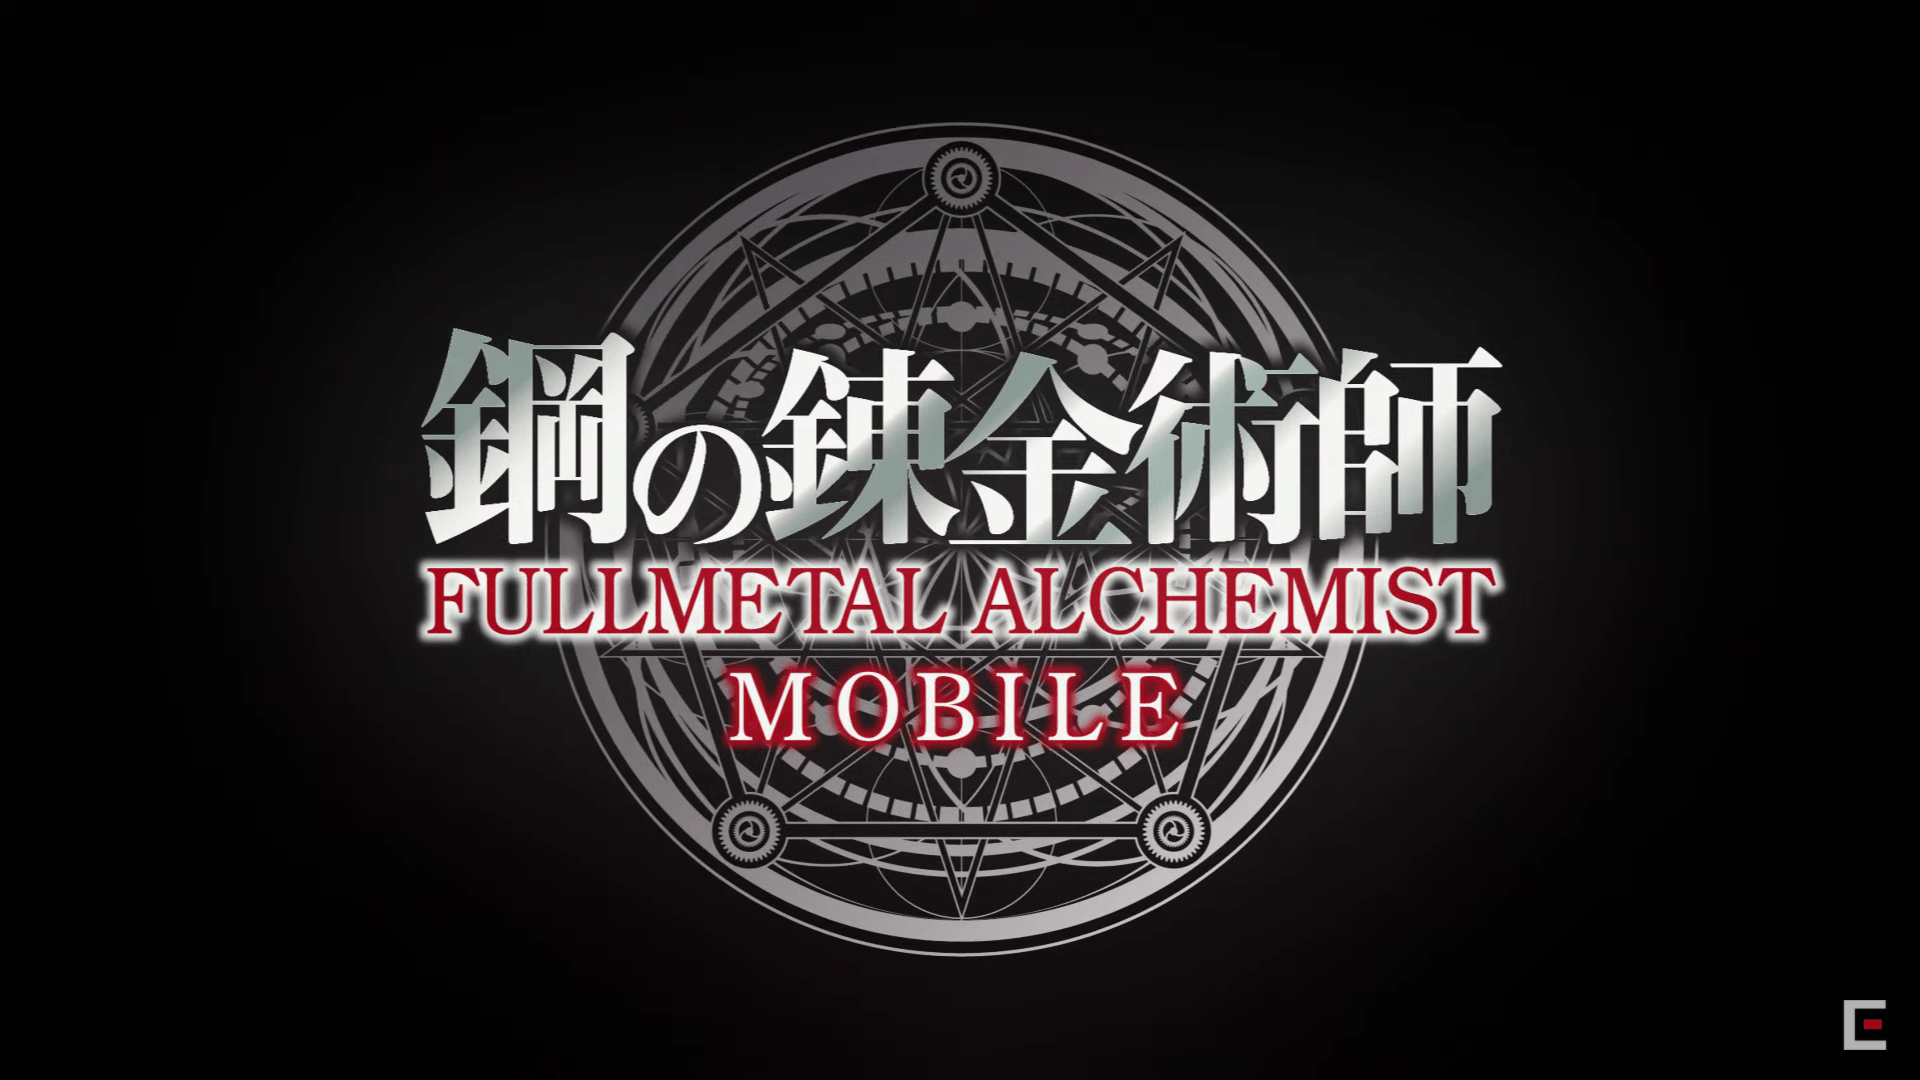 Square Enix Garap Game Mobile Fullmetal Alchemist